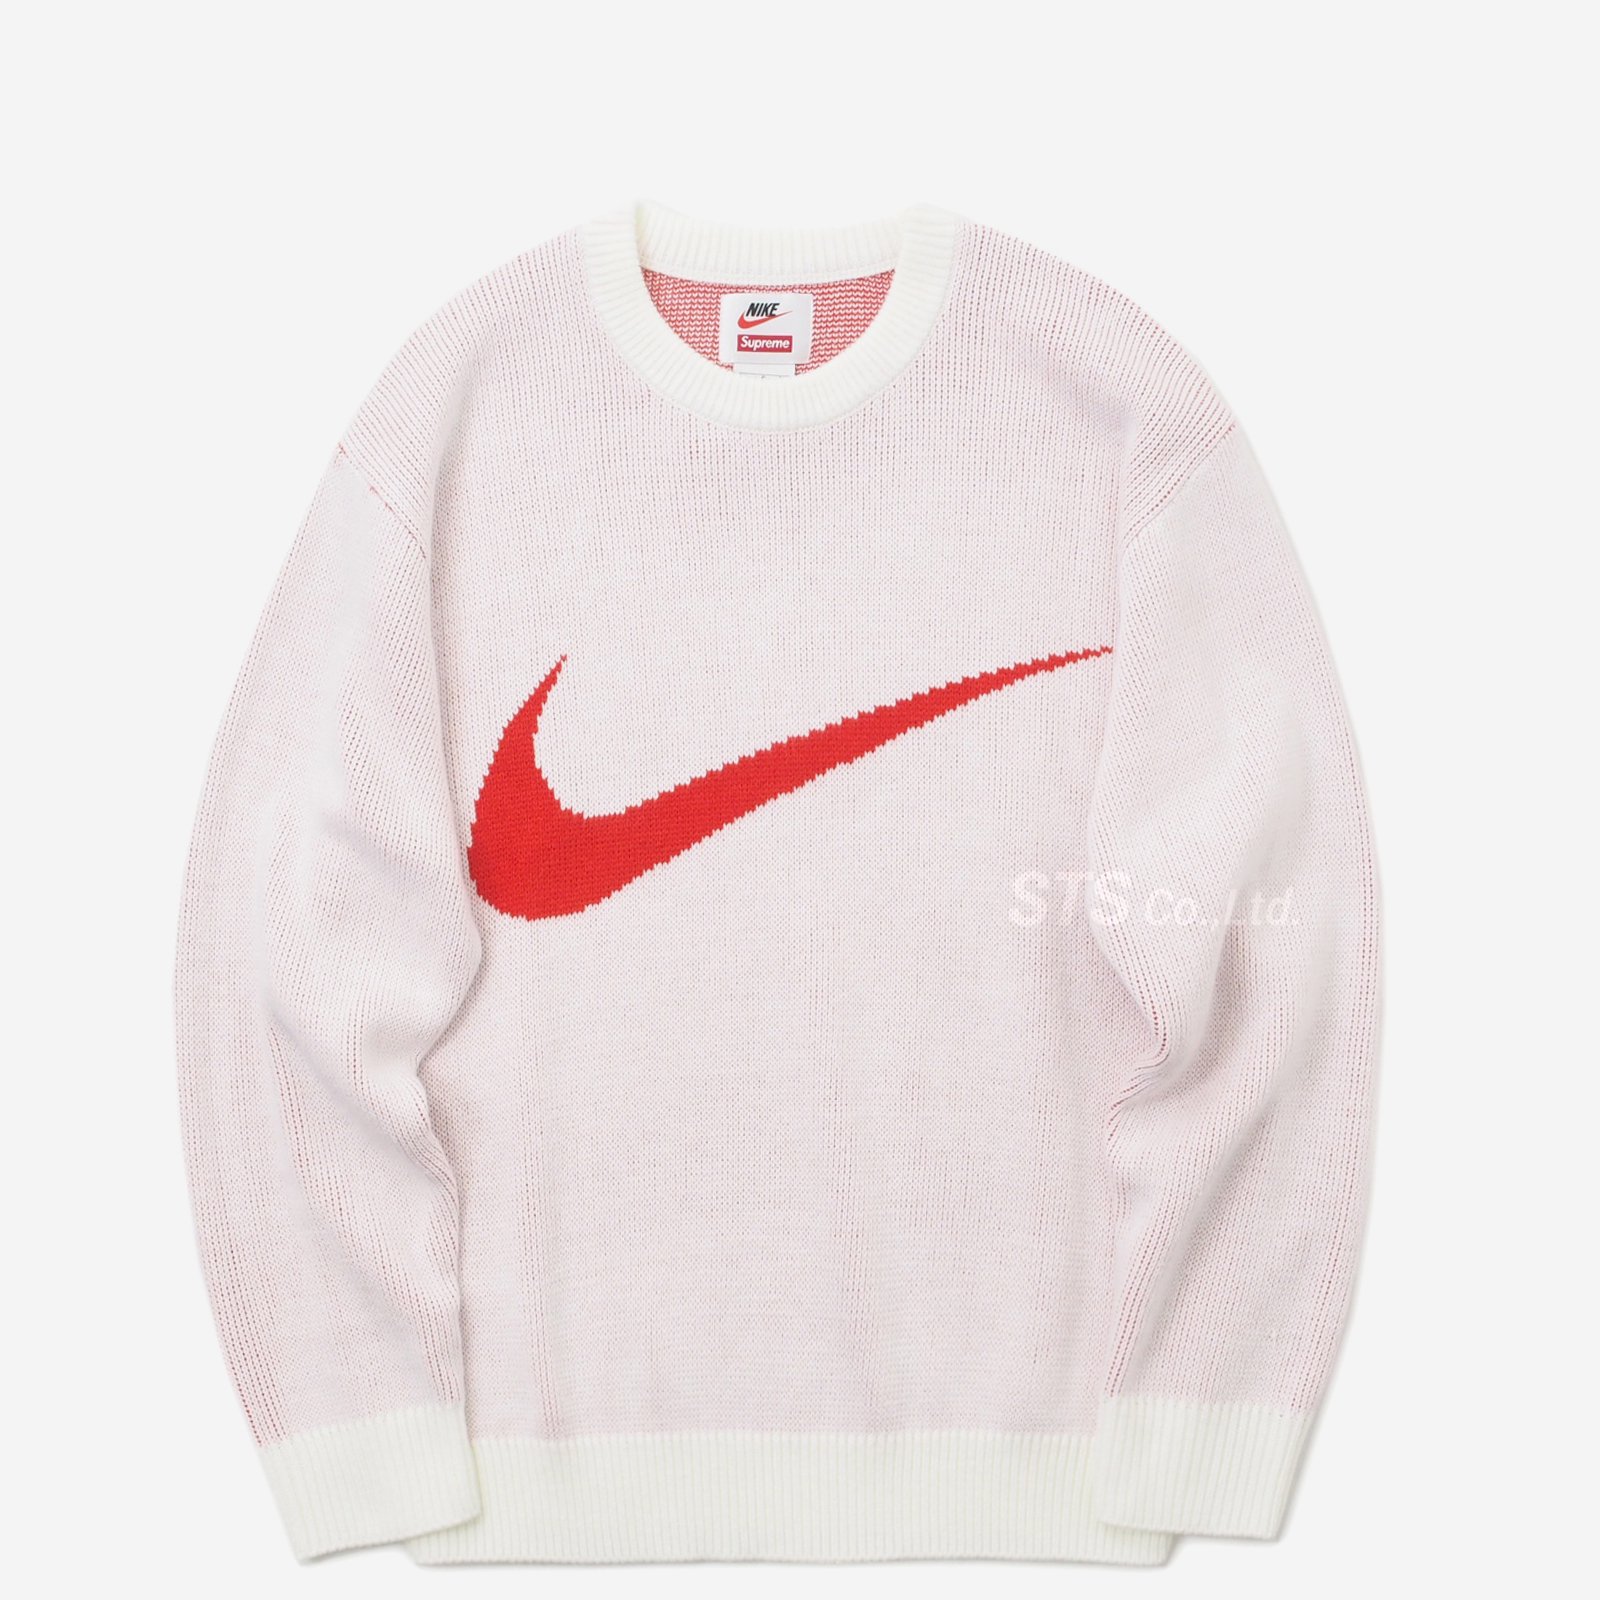 Supreme/Nike Swoosh Sweatersupsupsup1234